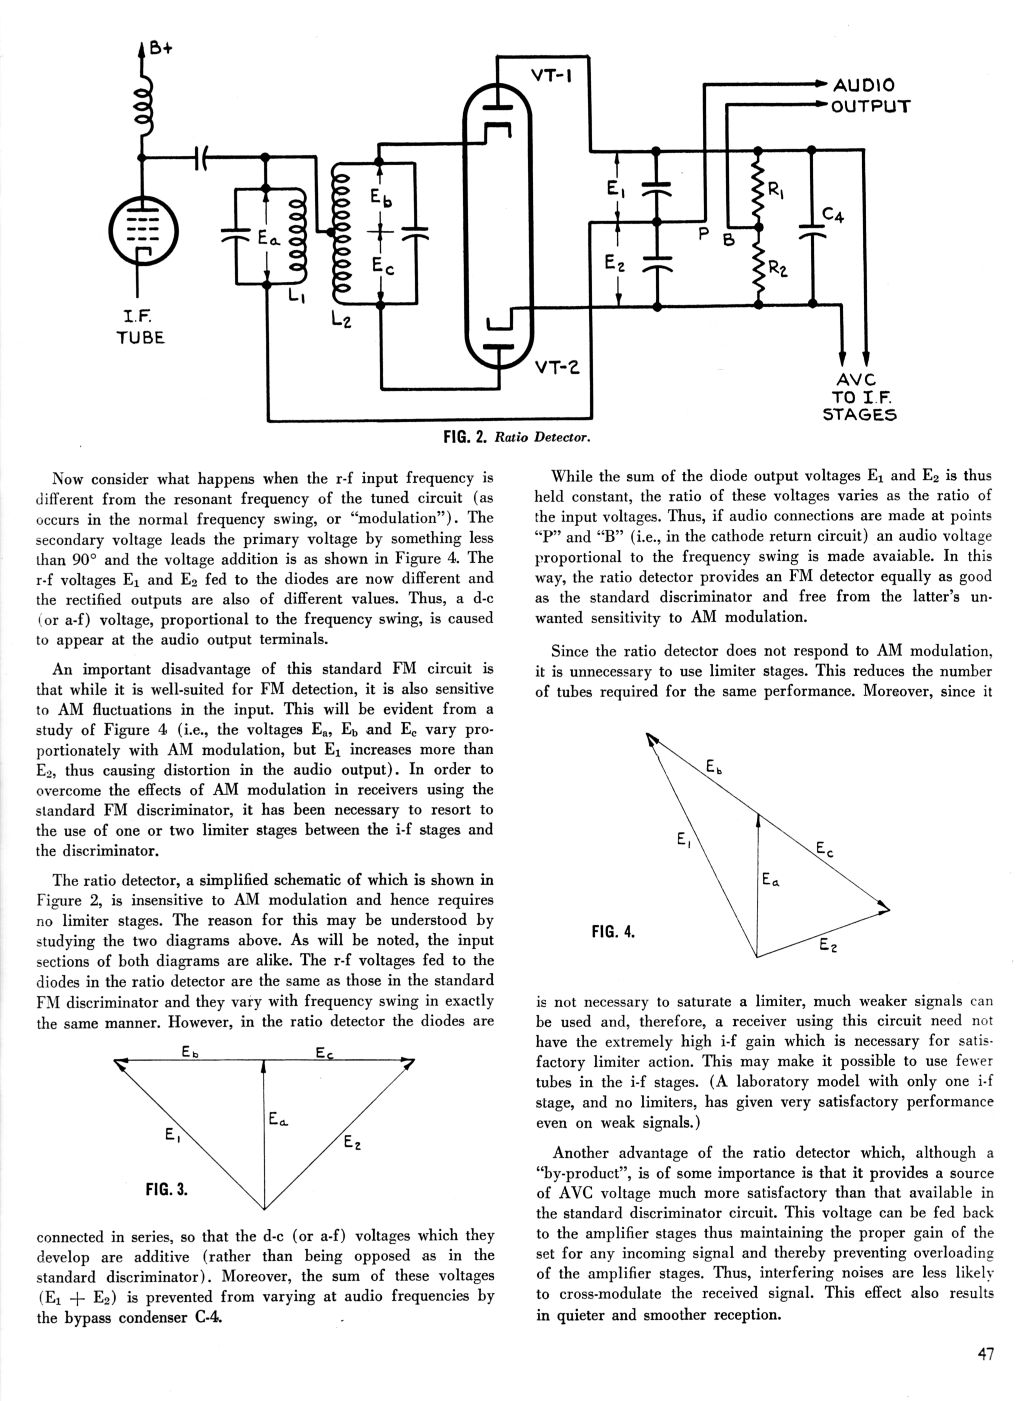 Ratio Detector Simplifies FM Receiver Design, page 2